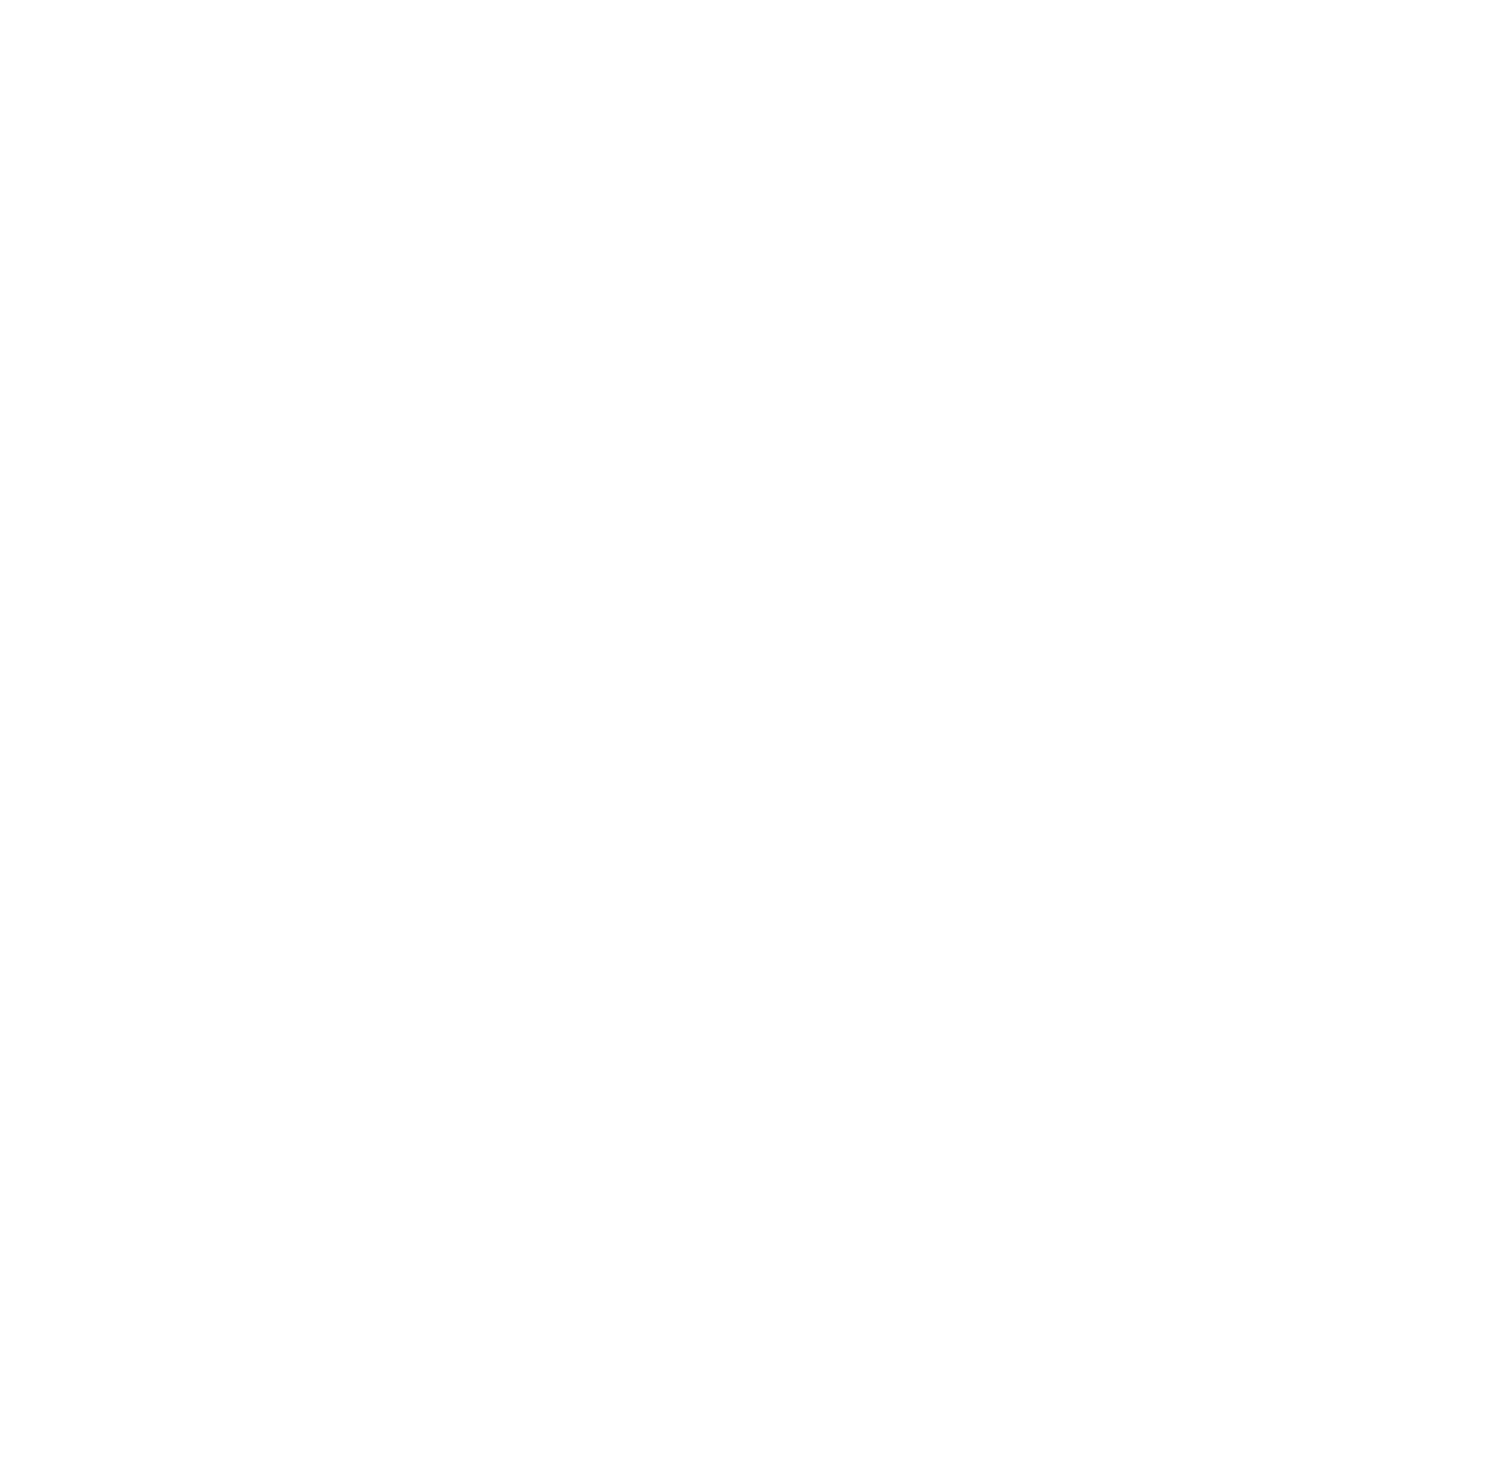 Episcopal Church of the Resurrection